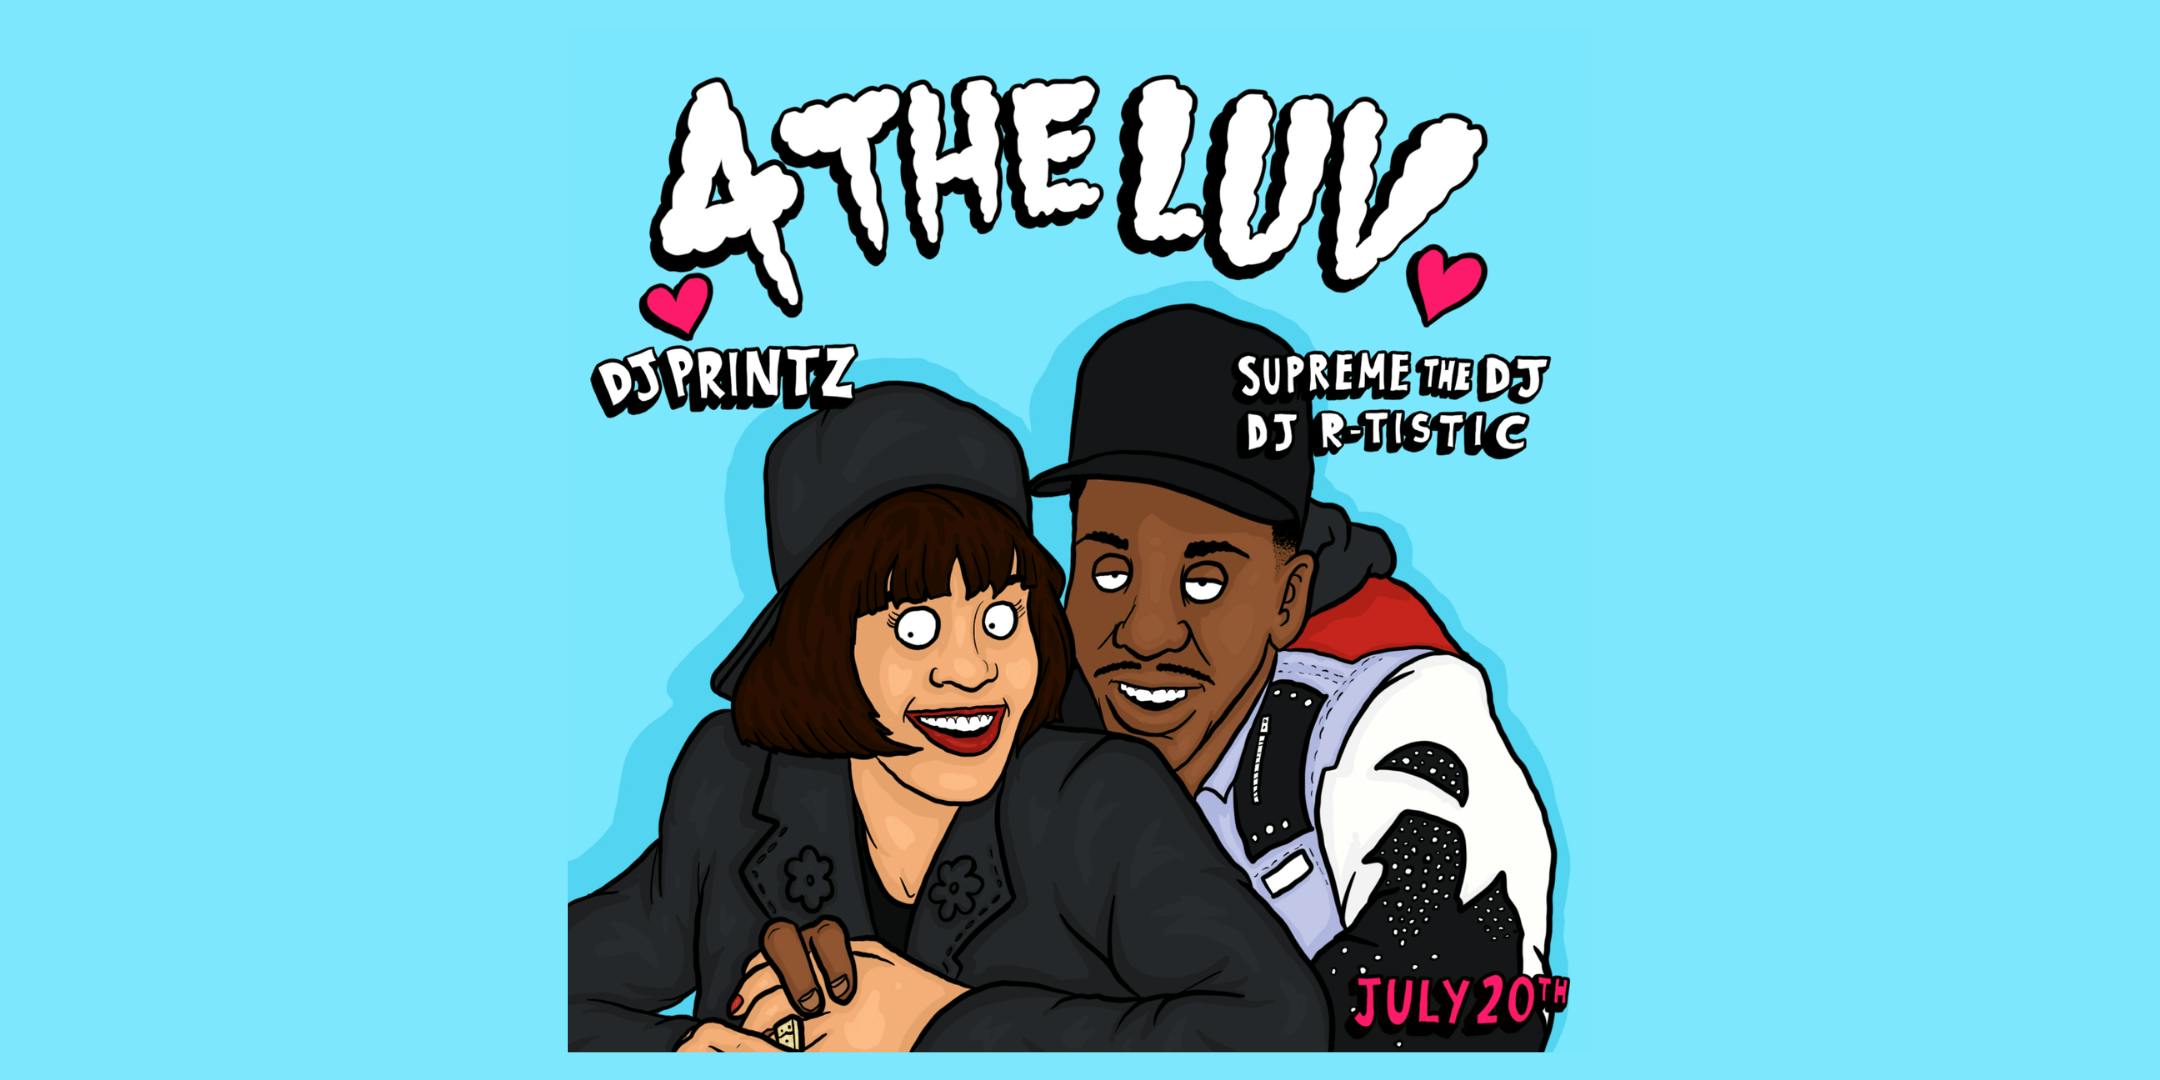  [7.20.19] #4THELUV R&B PARTY W/ DJ Printz, DJ R-TISTIC & SUPREME THE DJ 